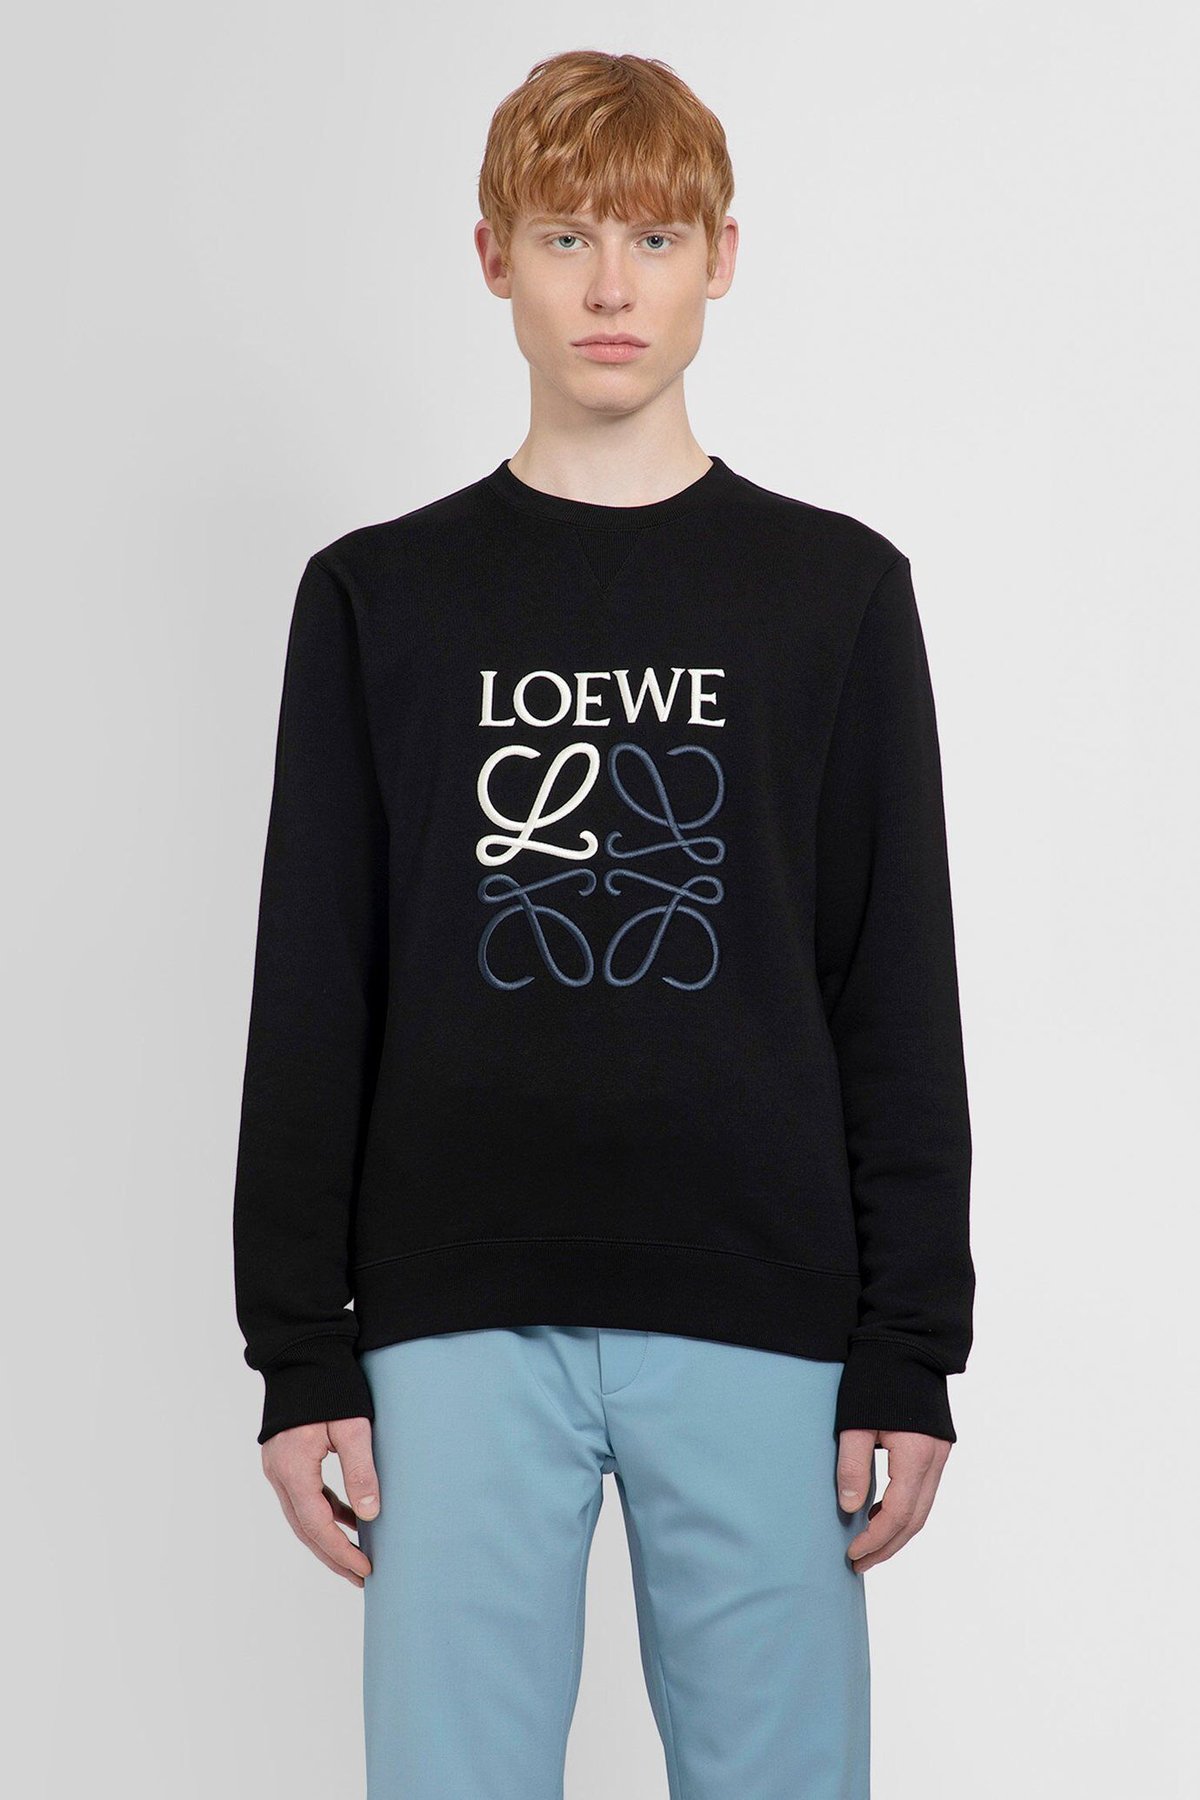 LOEWEロエベロゴ刺繍クルーネックスウェットシャツトレーナーブラックサイズM